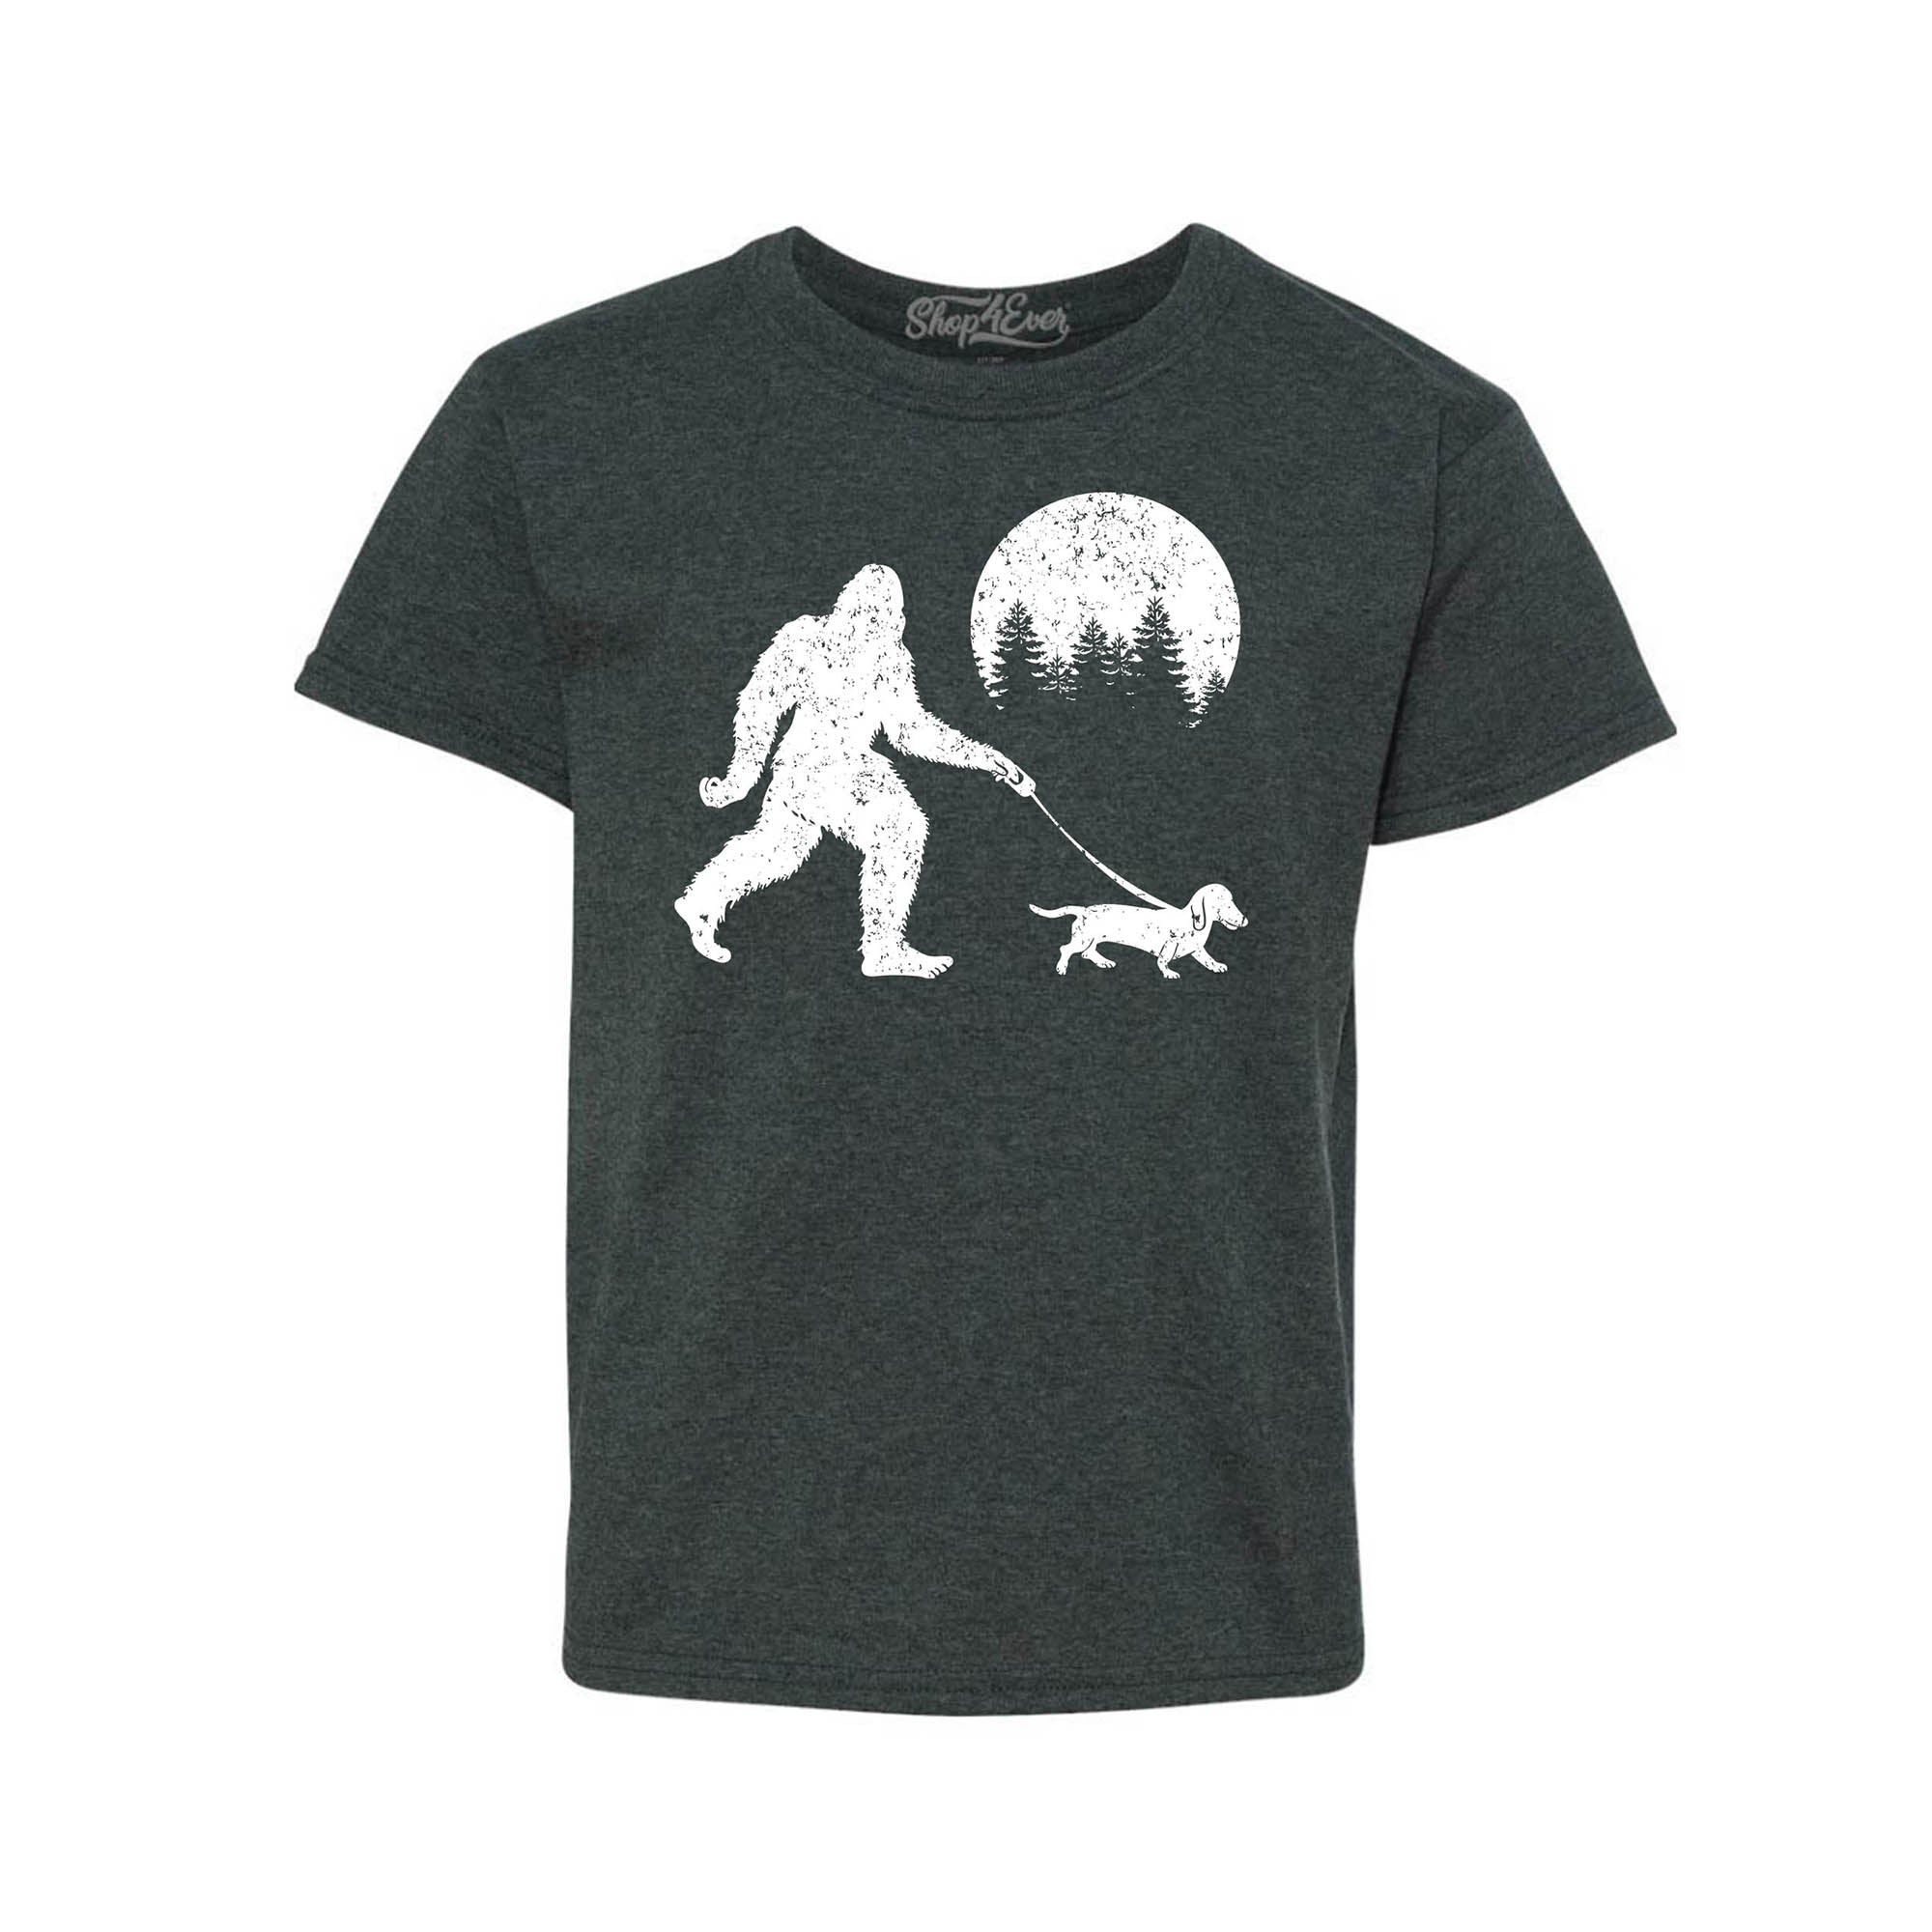 Bigfoot Walking Wiener Dog Funny Sasquatch Dachshund Youth's T-Shirt